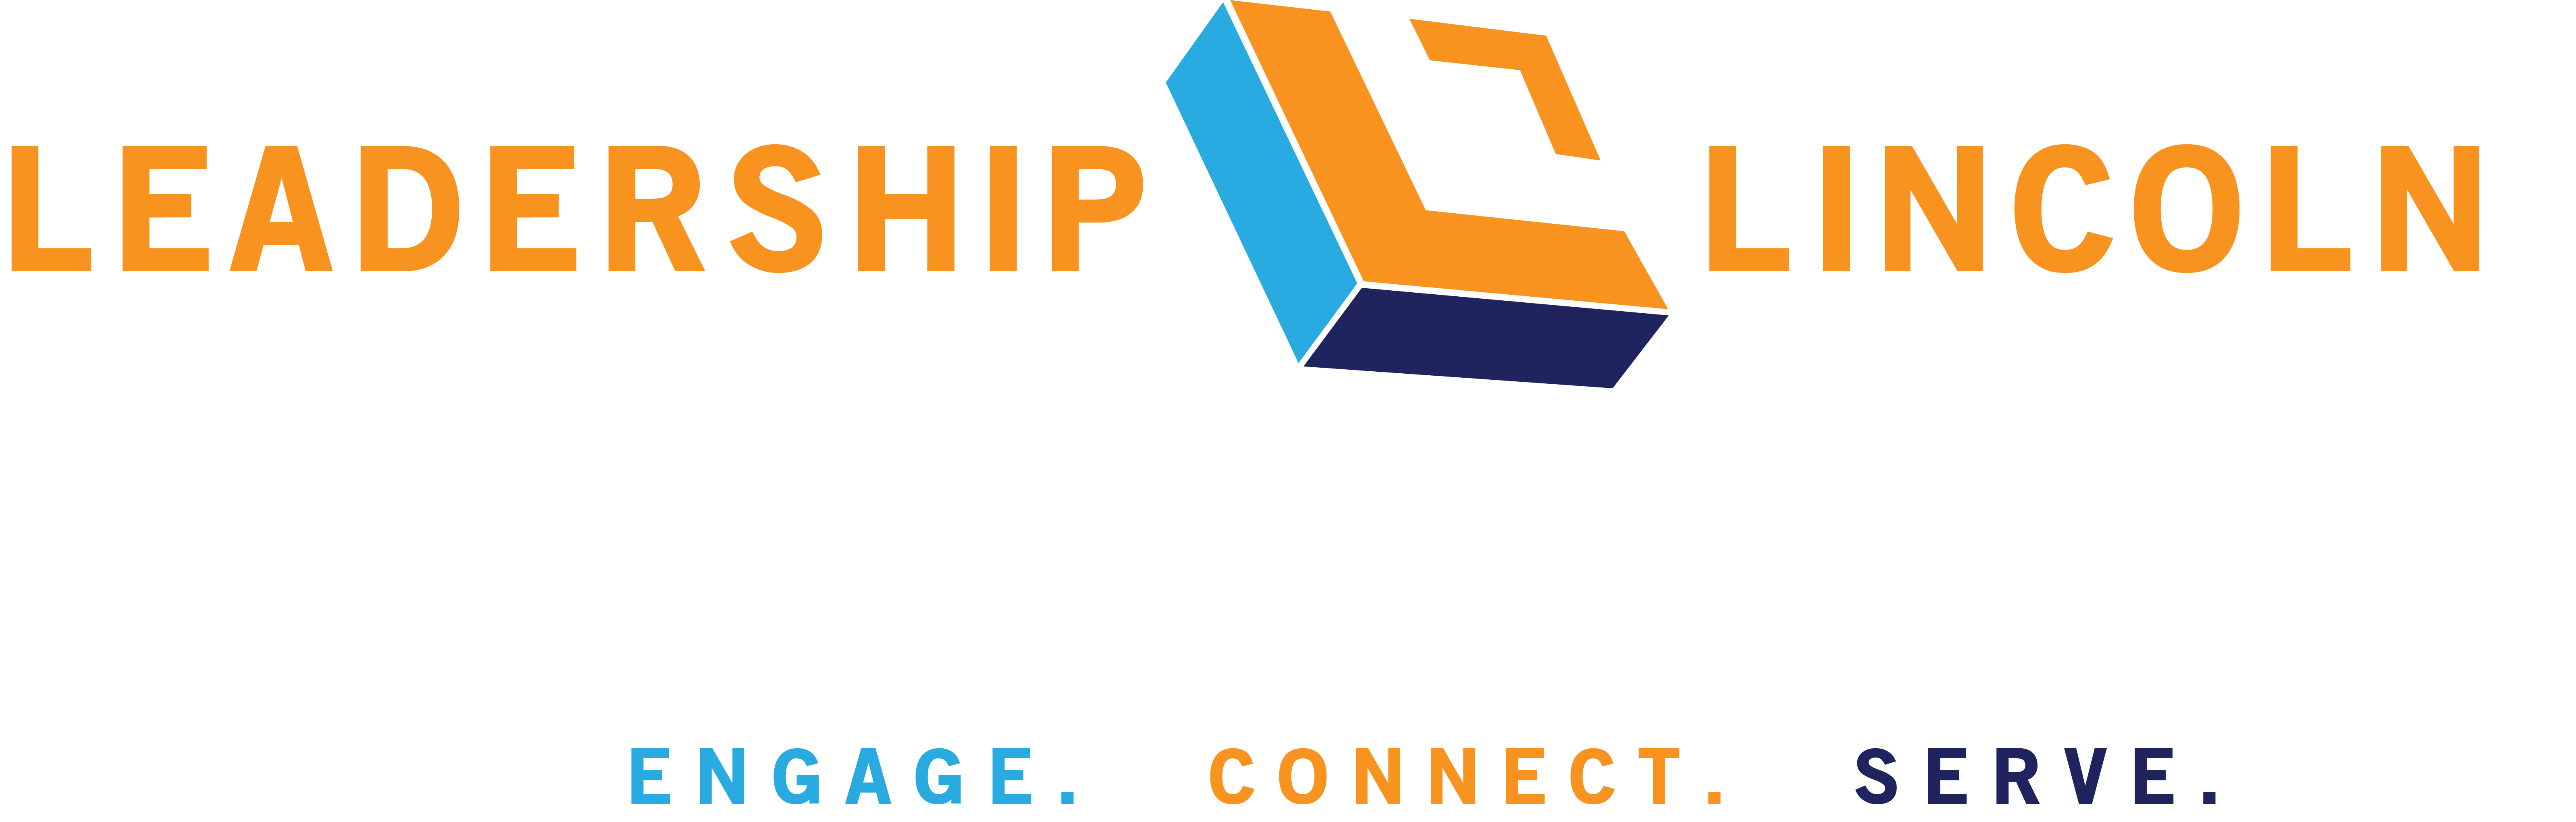 Leadership Lincoln logo